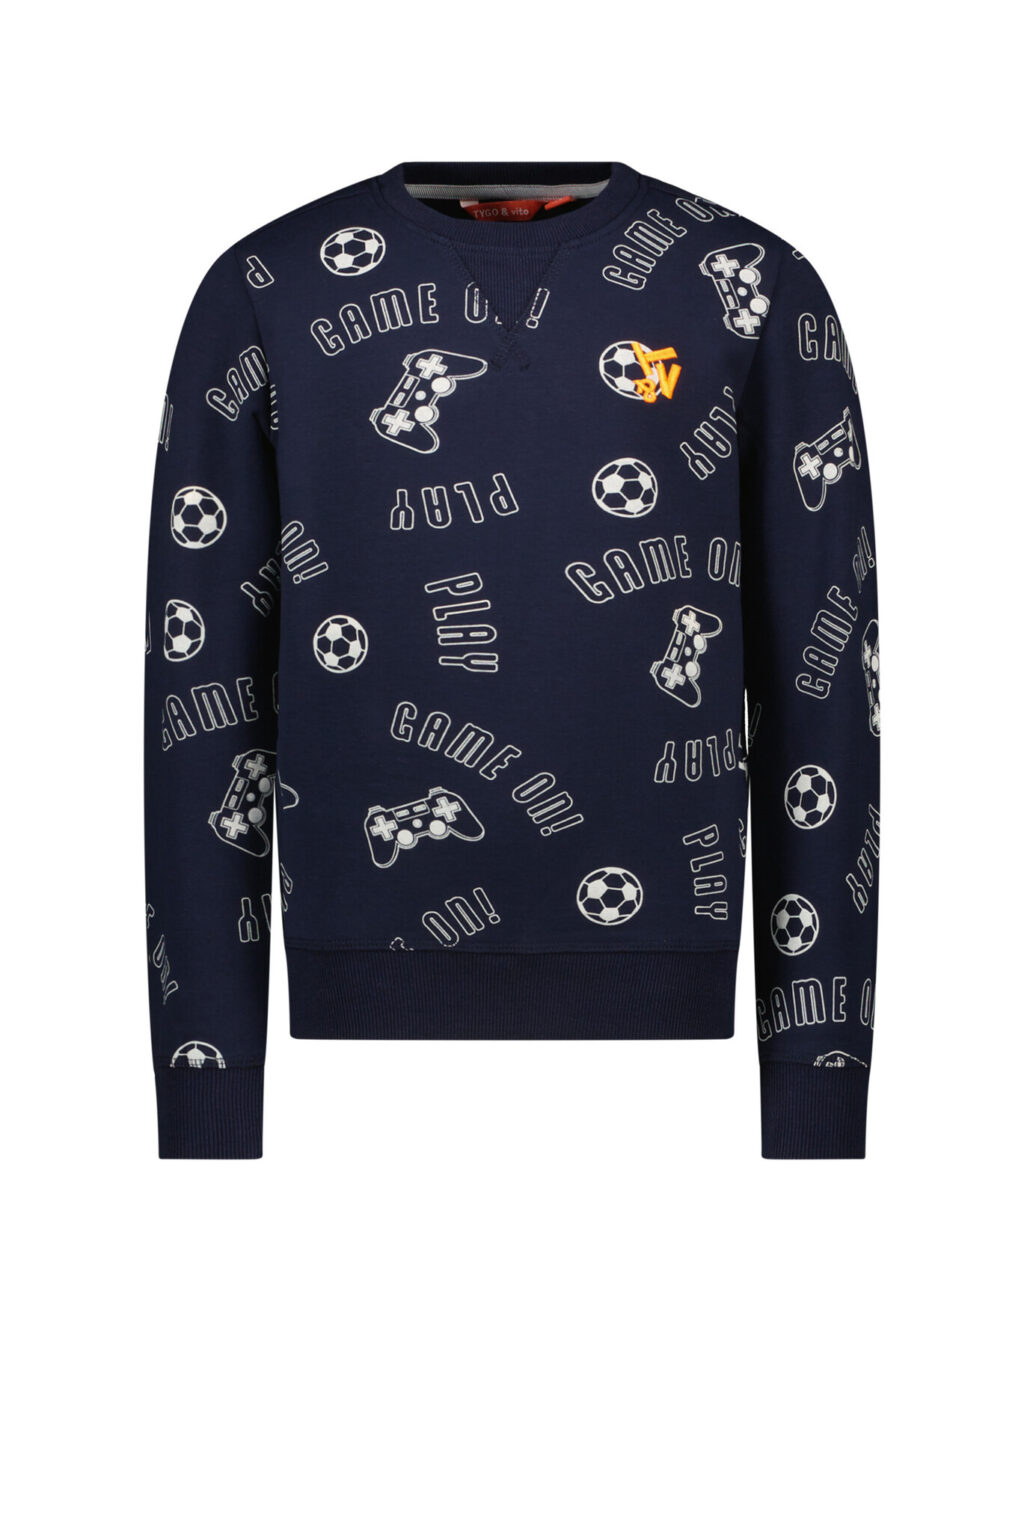 Tygo & Vito Jongens sweater AOP - Jesse - Navy blauw ~ Spinze.nl